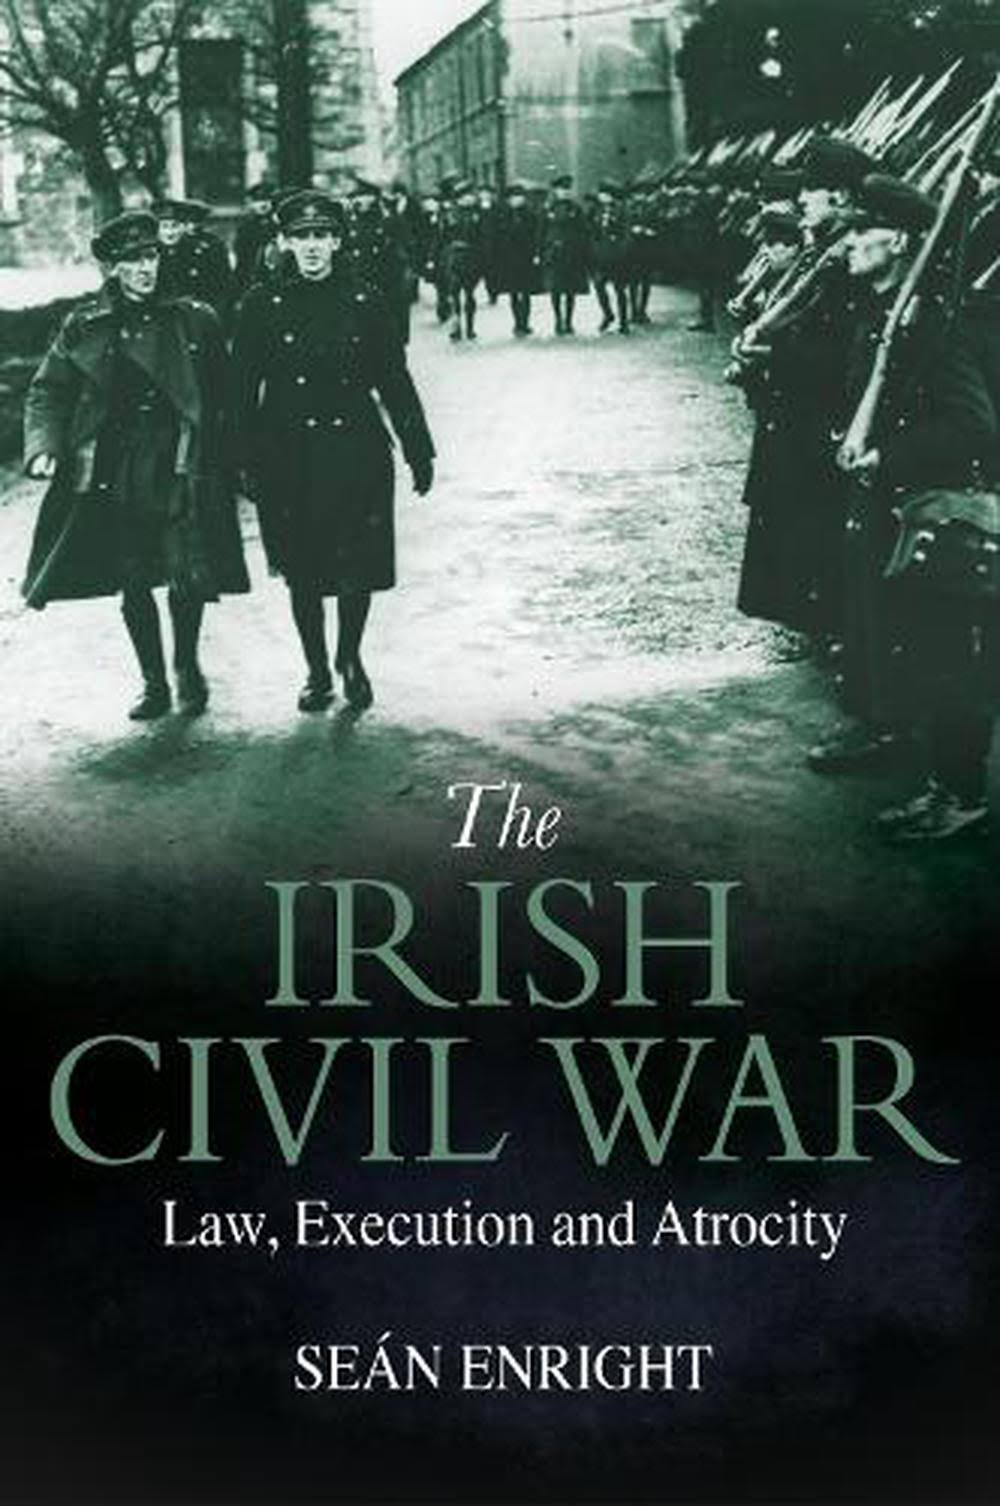 The Irish Civil War by Sean Enright